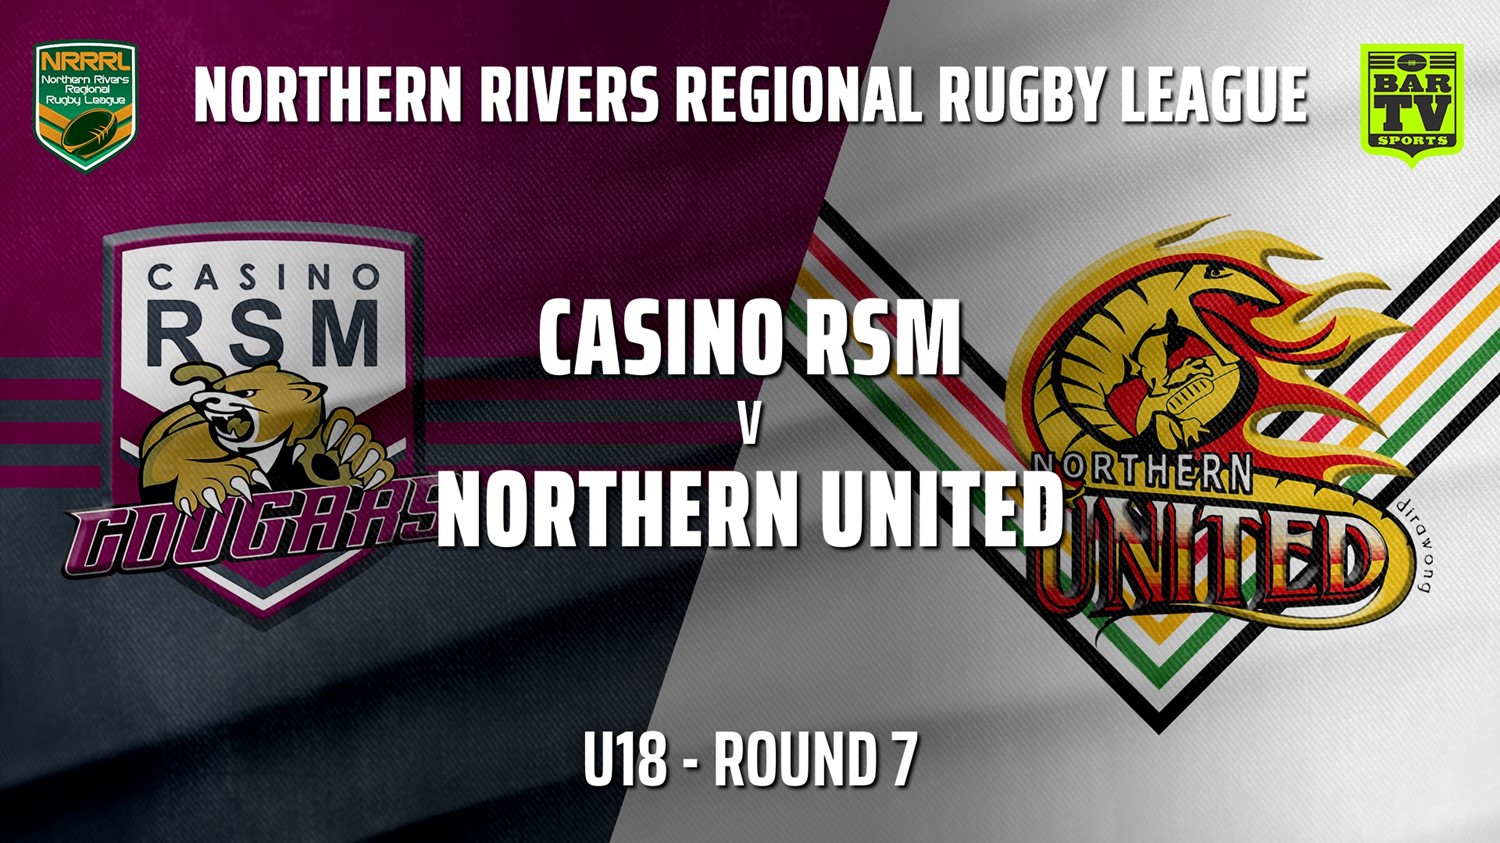 210620-Northern Rivers Round 7 - U18 - Casino RSM Cougars v Northern United Slate Image